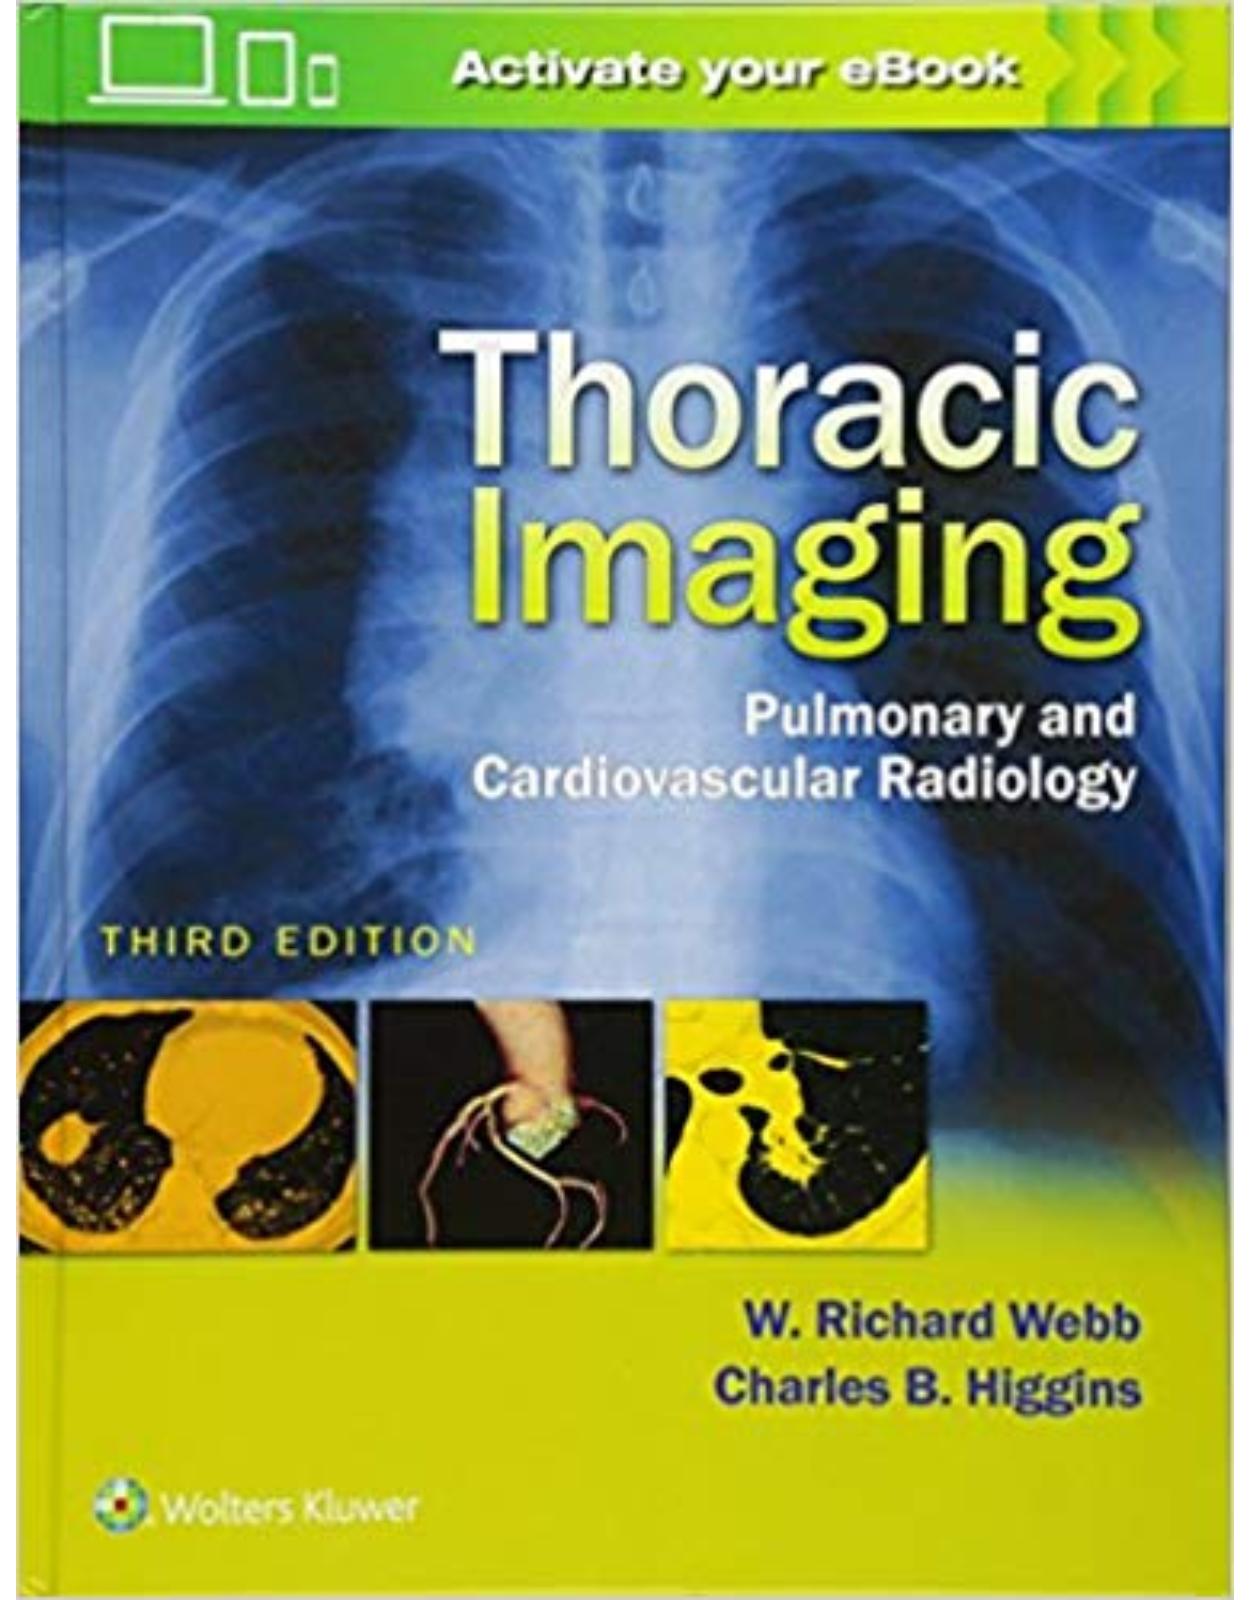 Thoracic Imaging, 3ePULMONARY AND CARDIOVASCULAR RADIOLOGY